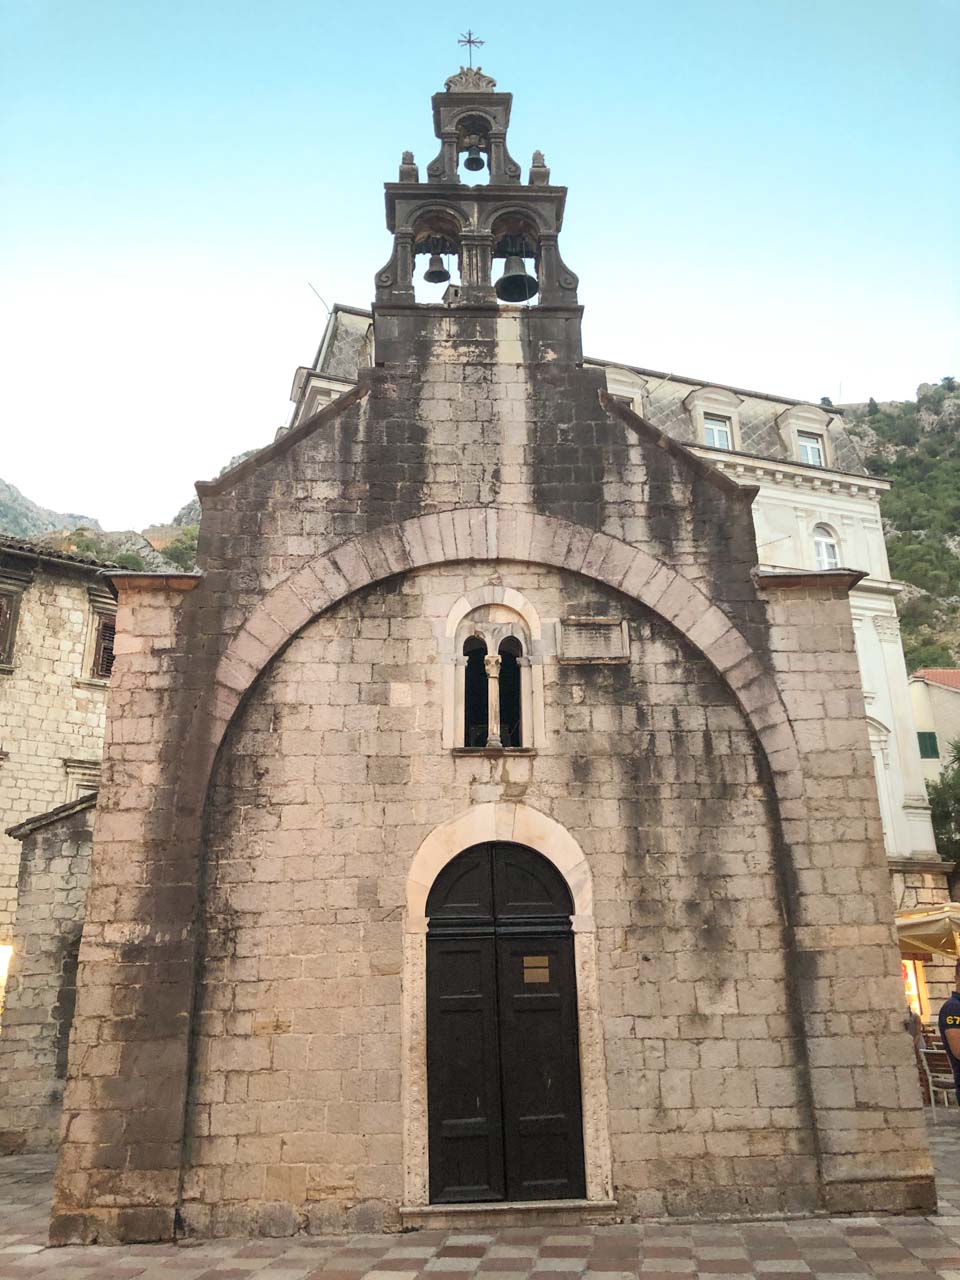 Saint Luke's Church in Kotor, Montenegro